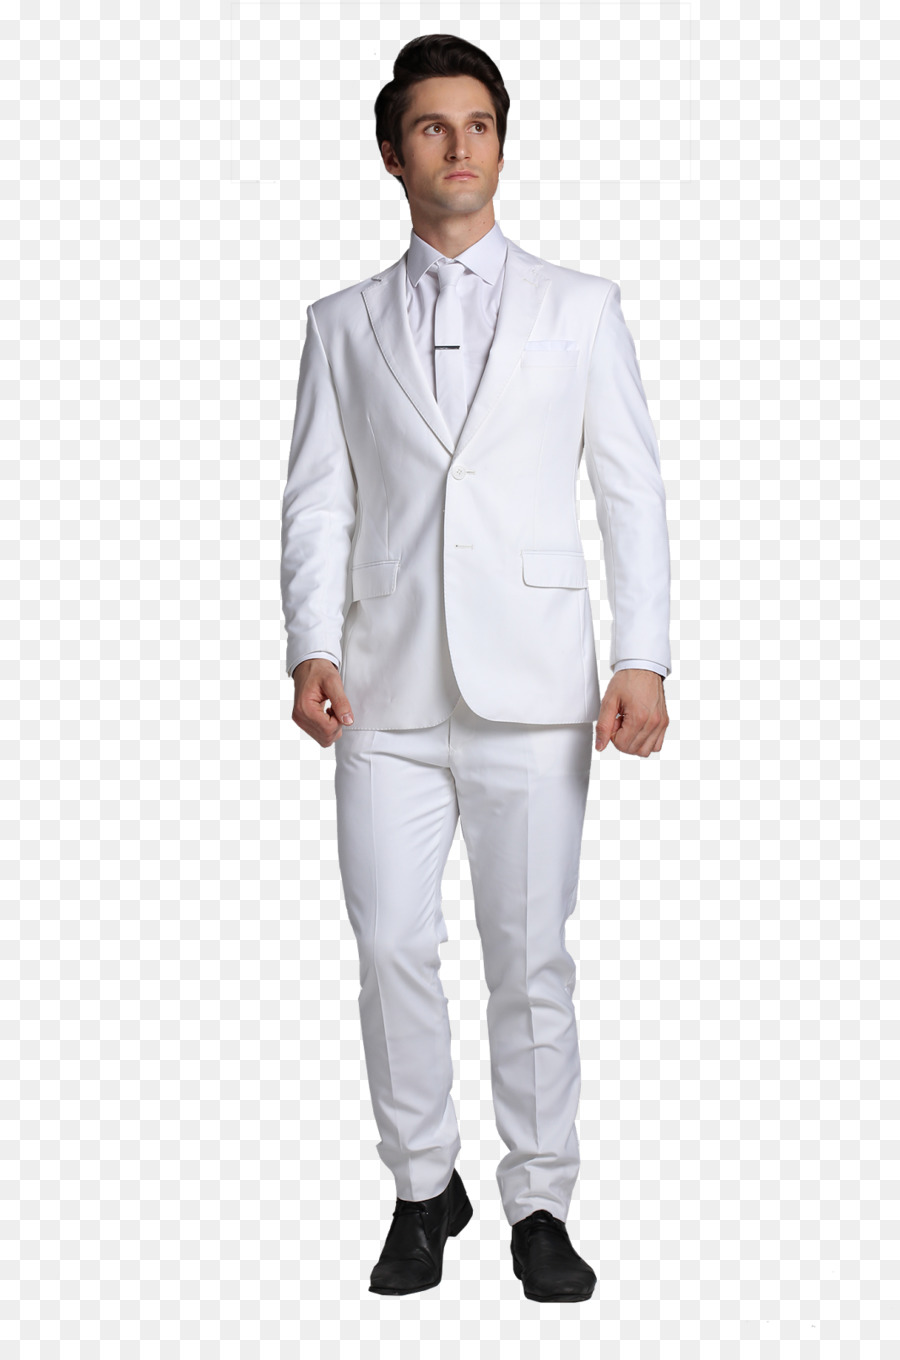 Suit Jacket Tuxedo Blazer - Image Men Suit PNG Transparent png download - 1066*1600 - Free Transparent Suit png Download.